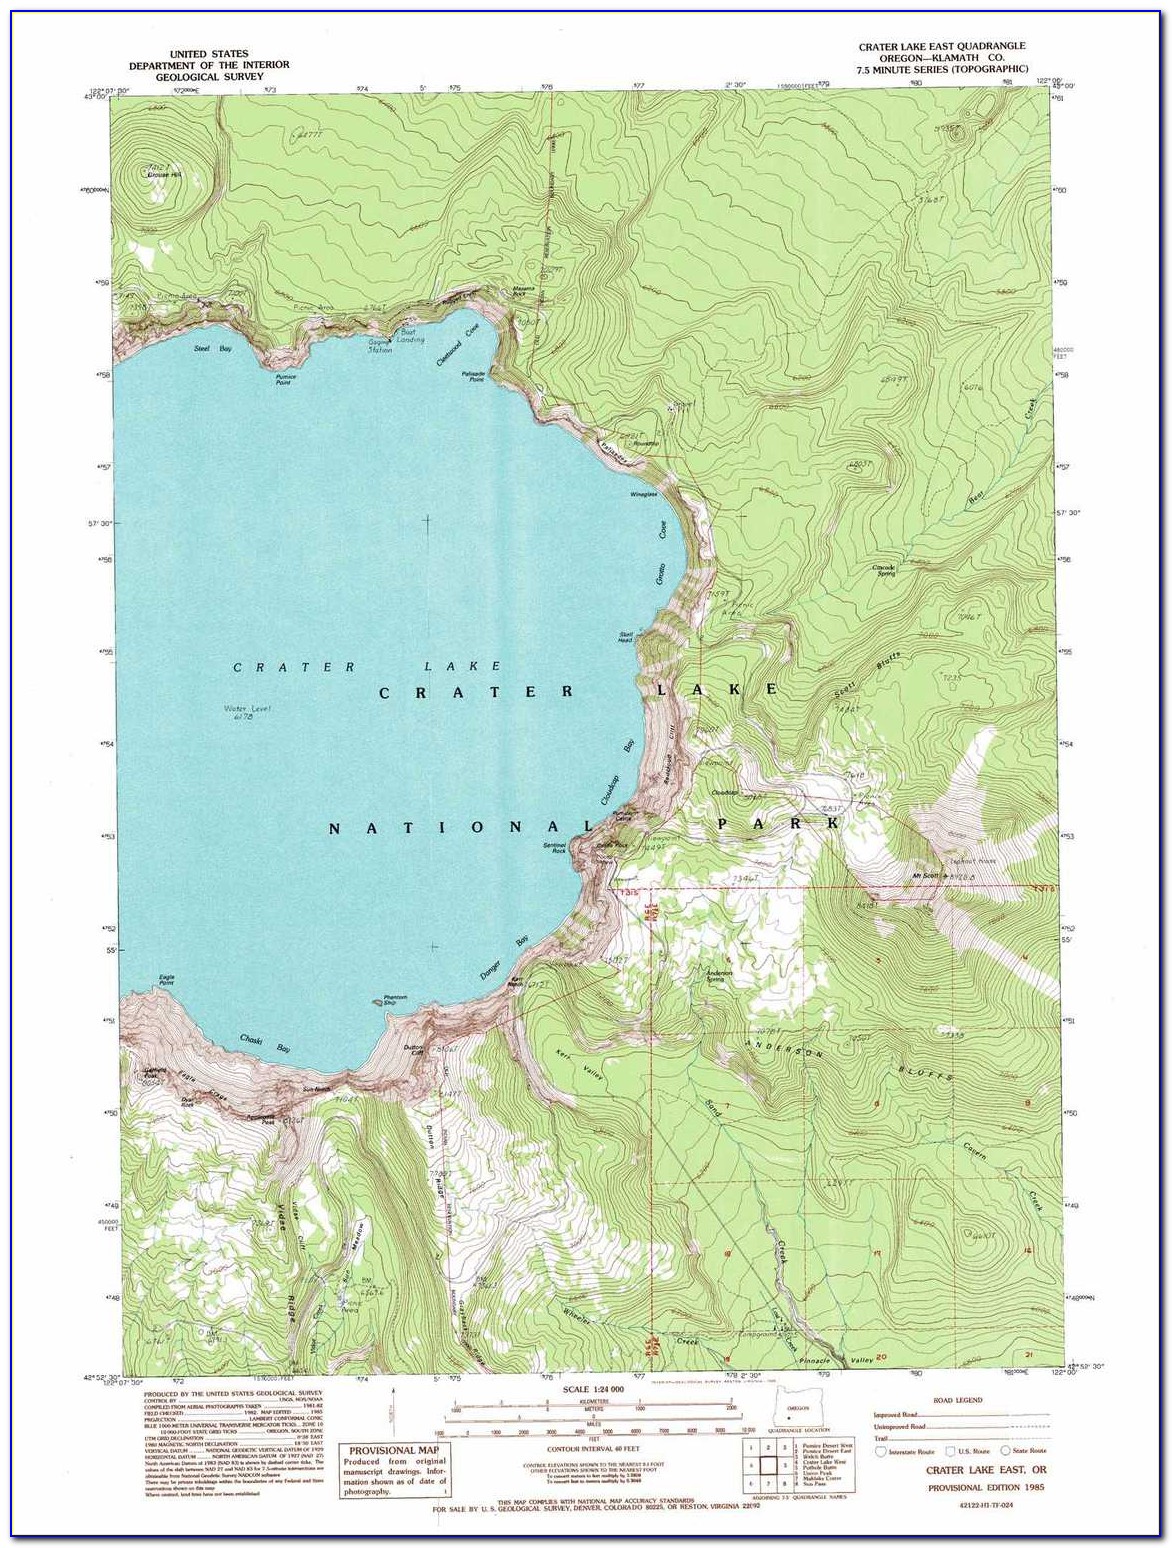 Topographic Lake Maps